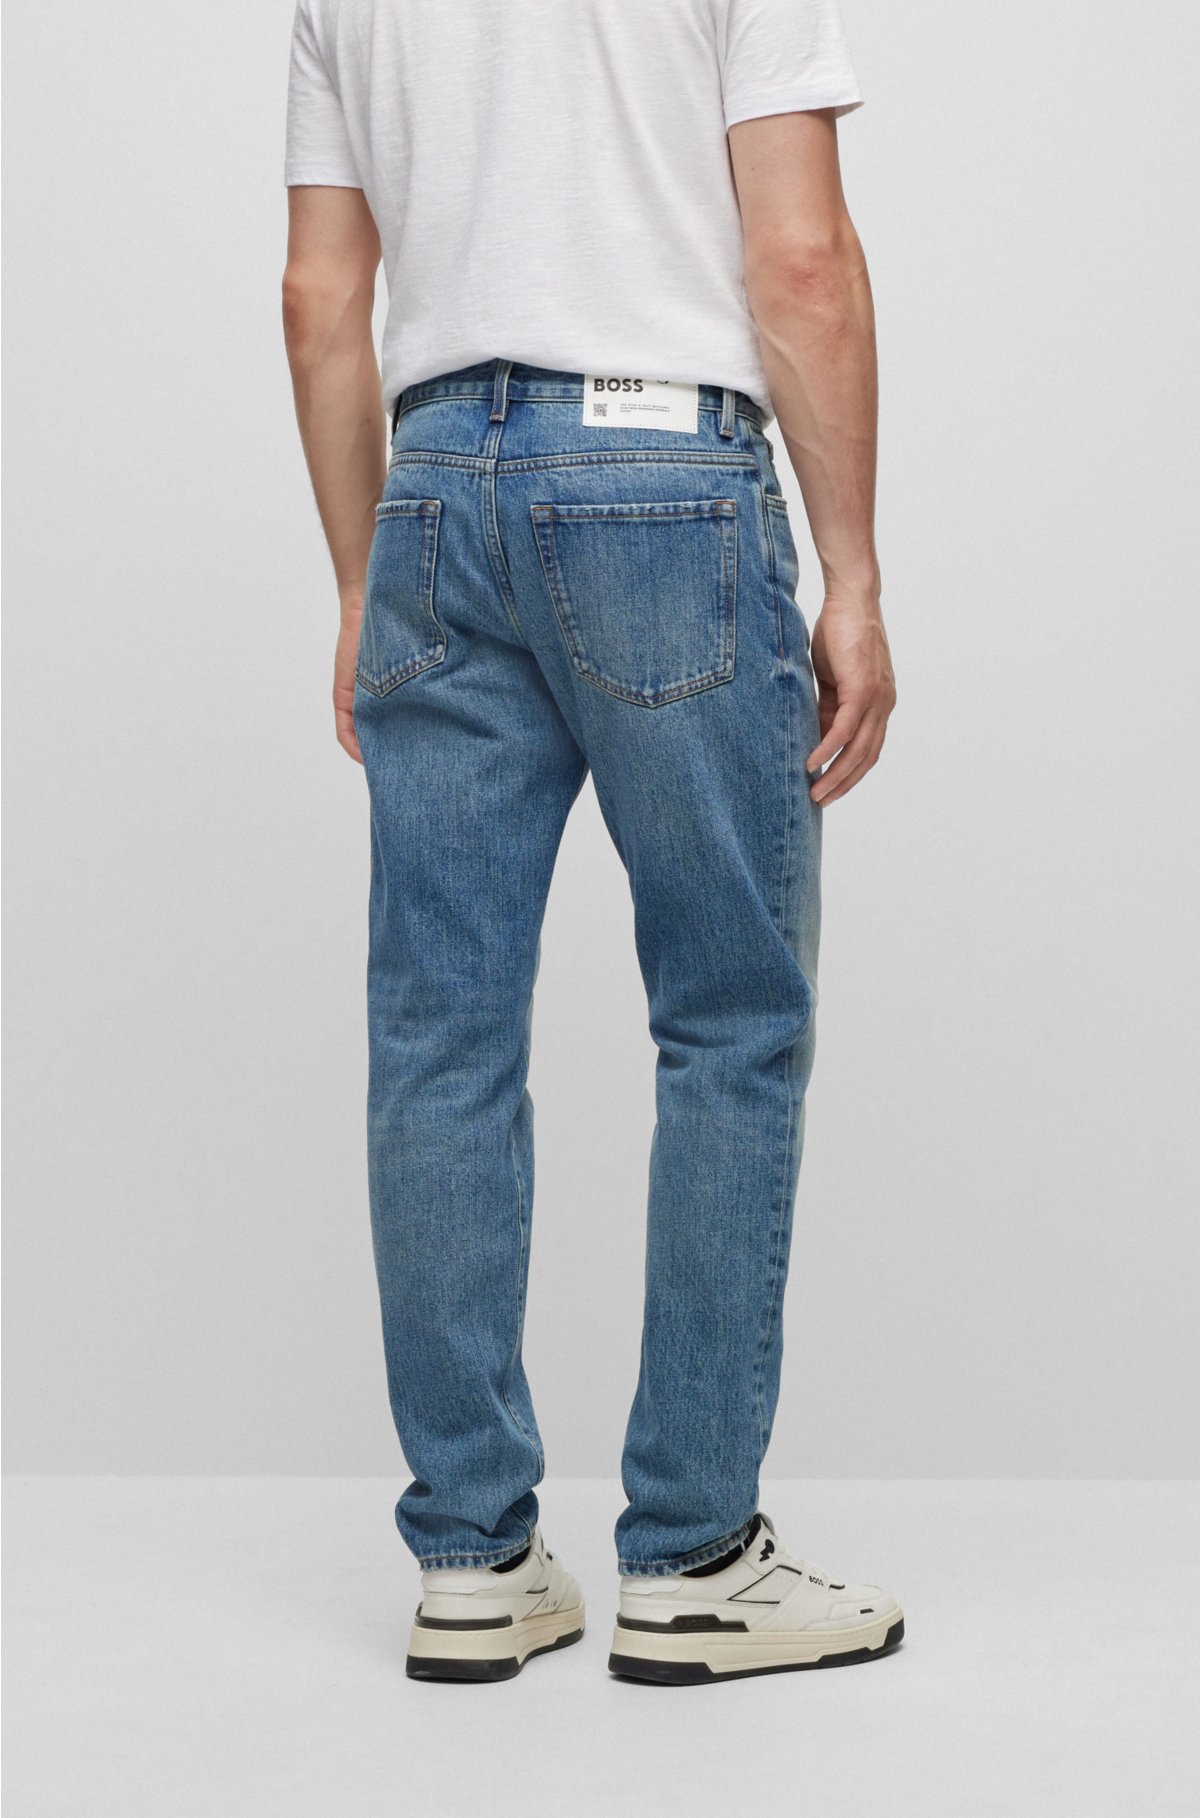 BOSS - Fully recyclable regular-fit jeans in blue rigid denim